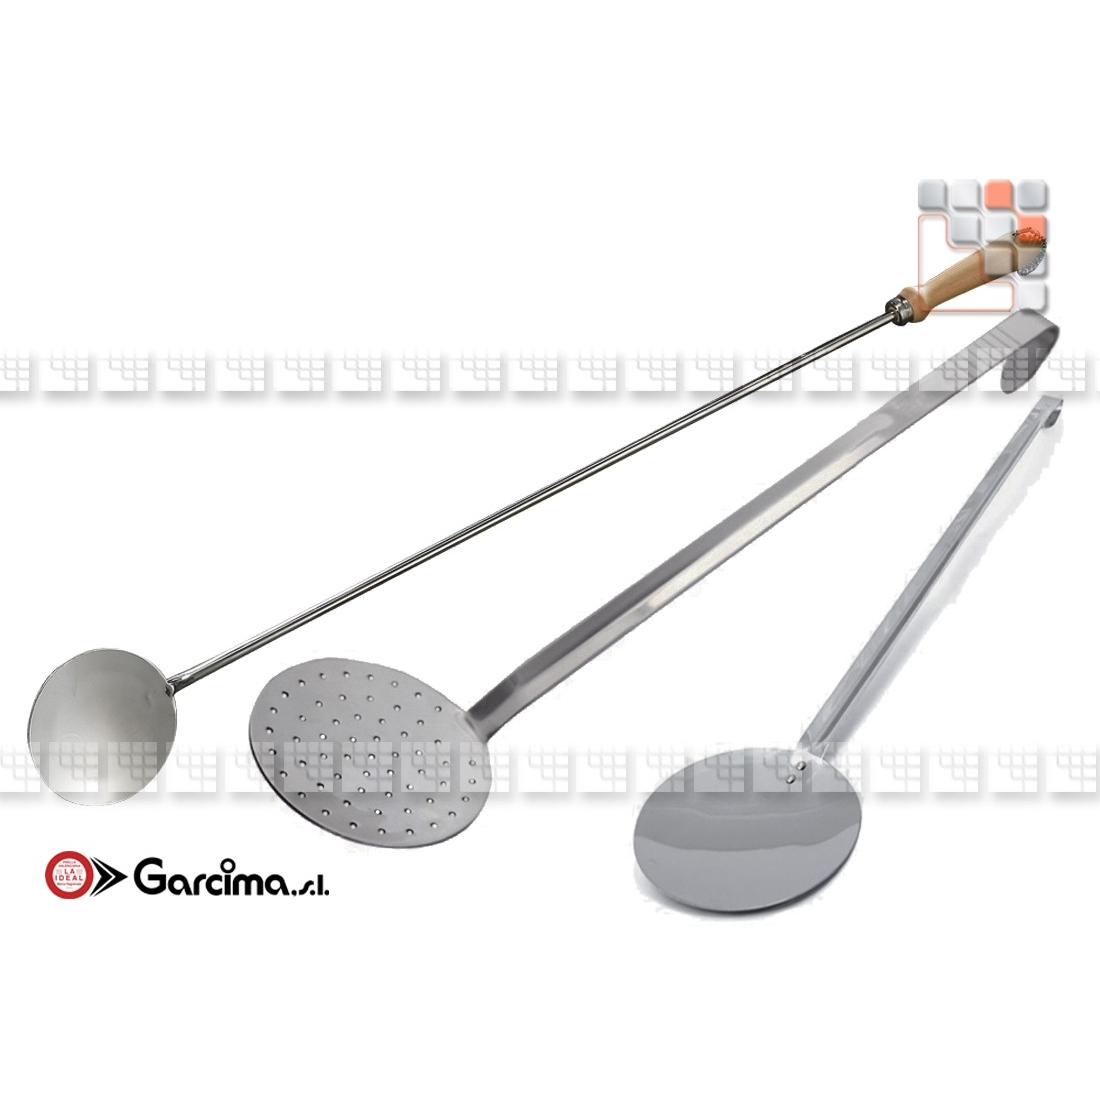 Garcima stainless steel and wood skimmer G46-70550 GARCIMA La Ideal - Accessoires Ustensils Paella Garcima